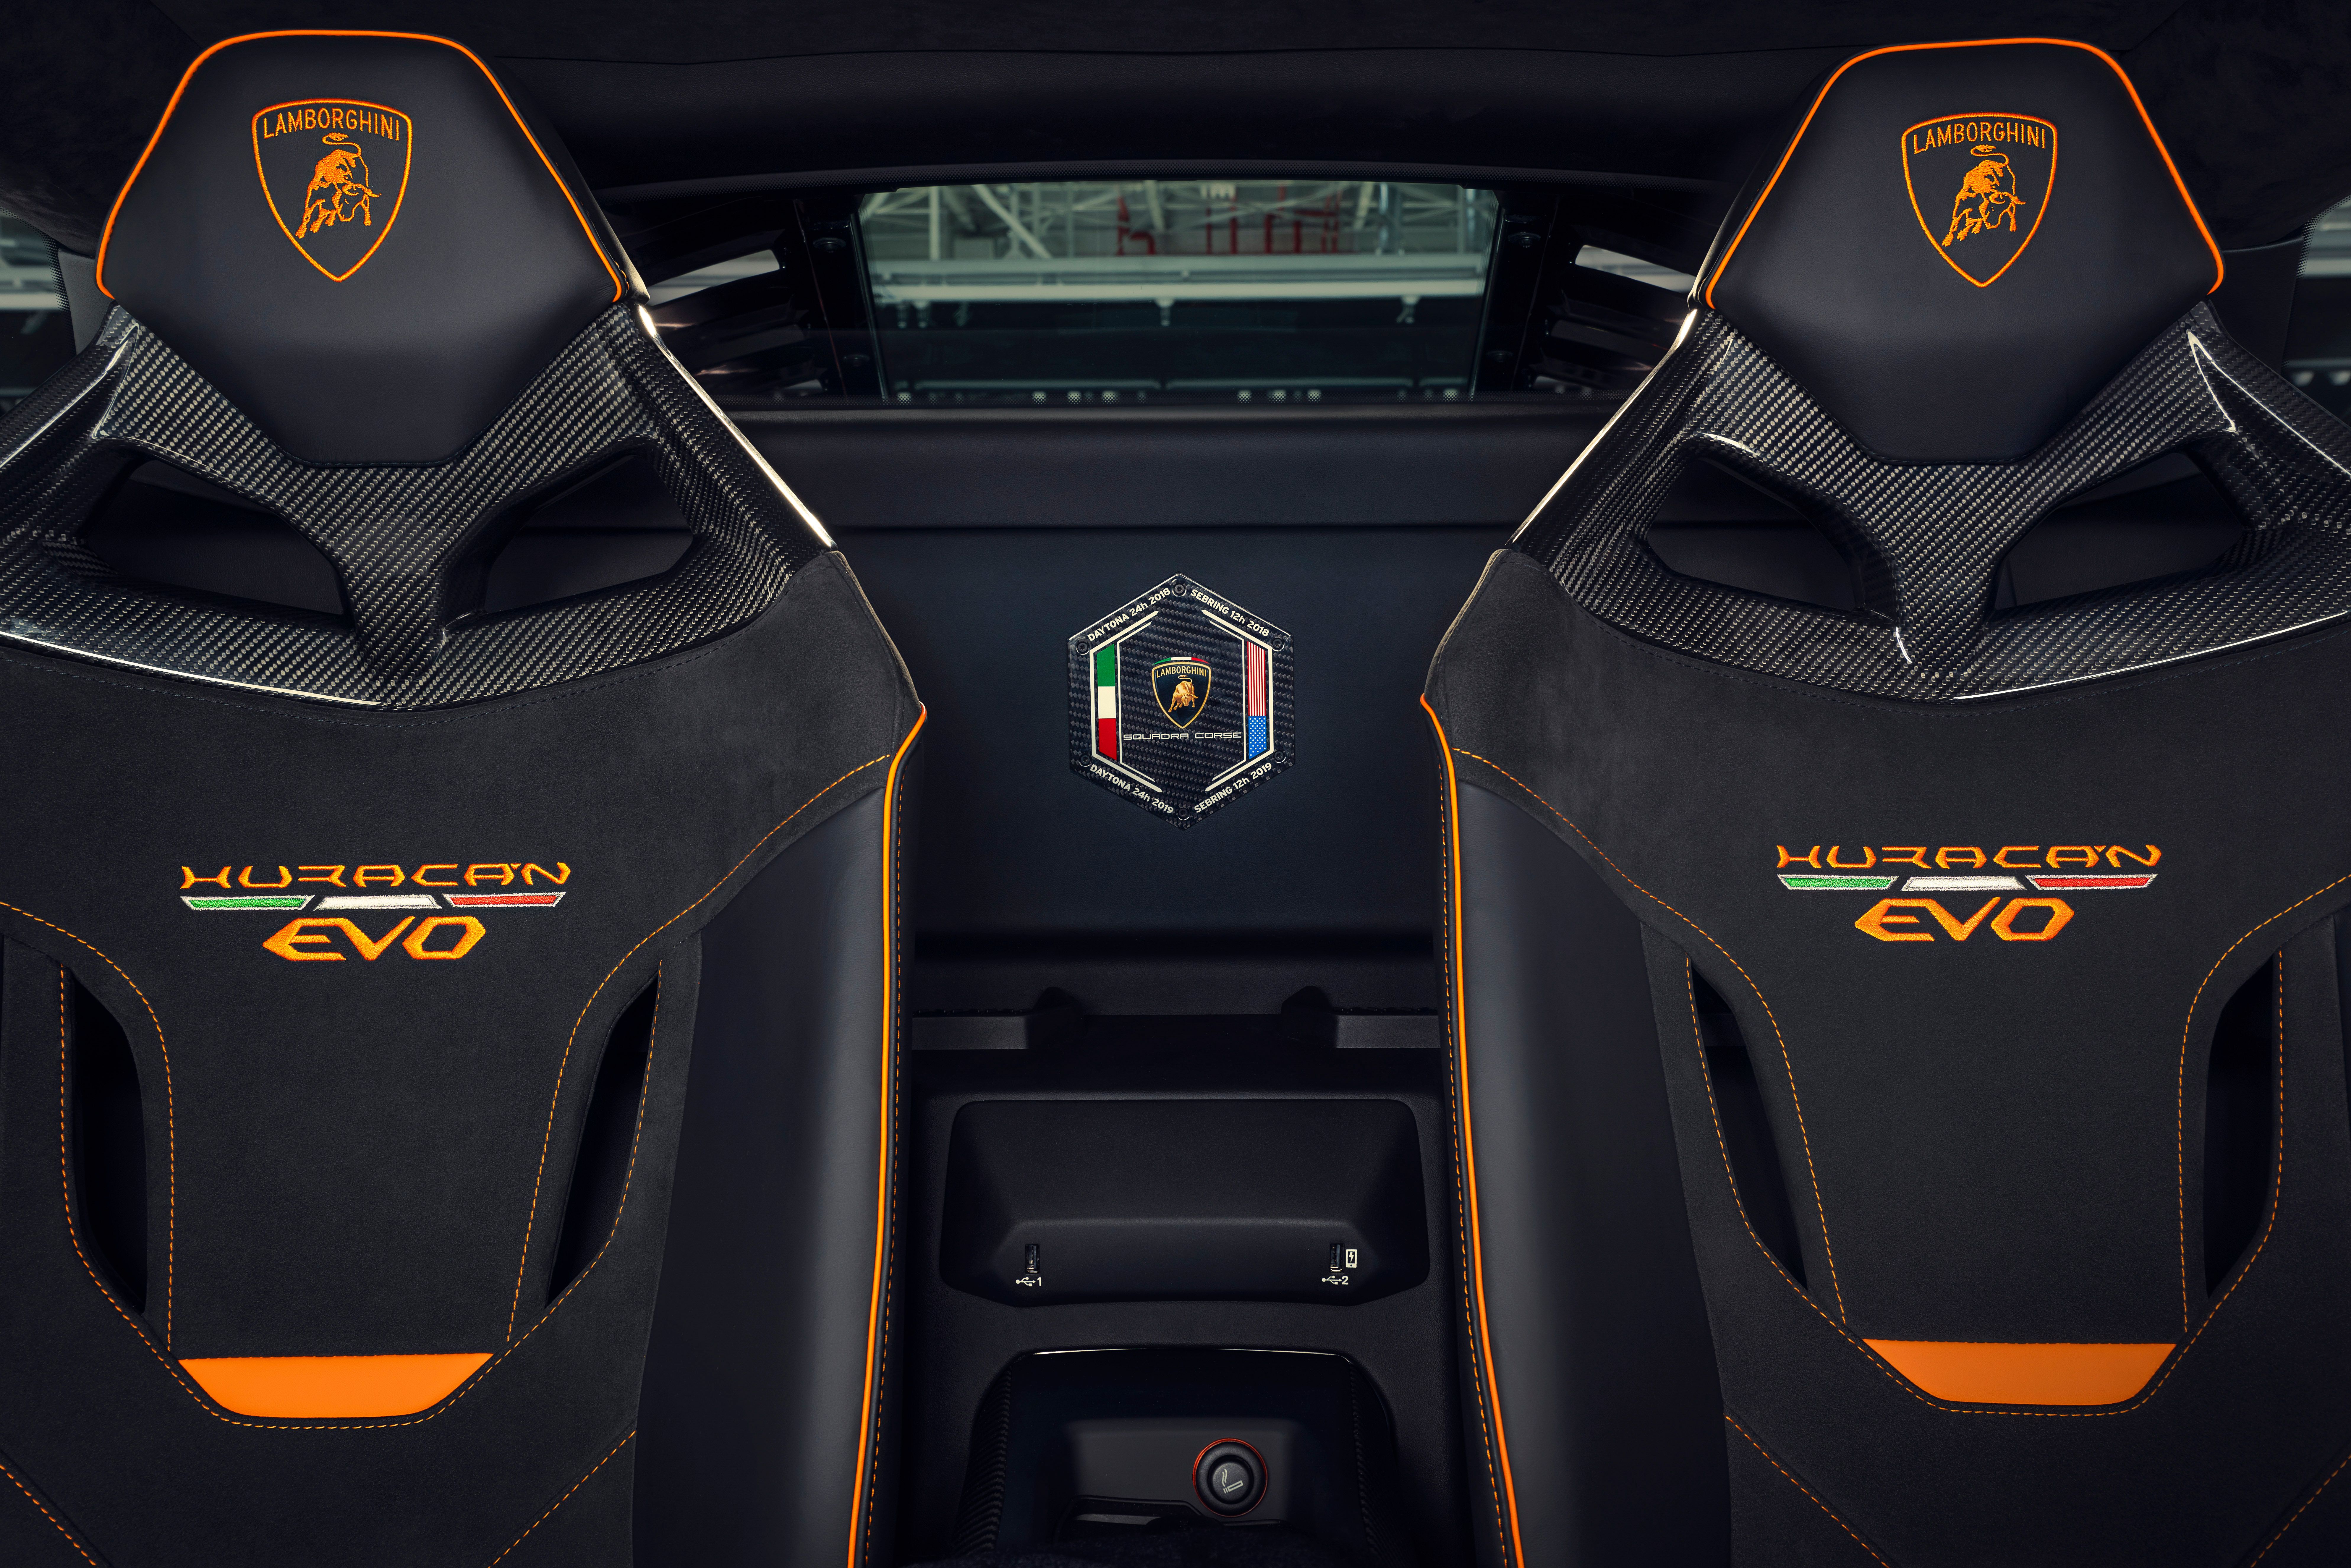 2019 Lamborghini Huracan EVO GT Celebration